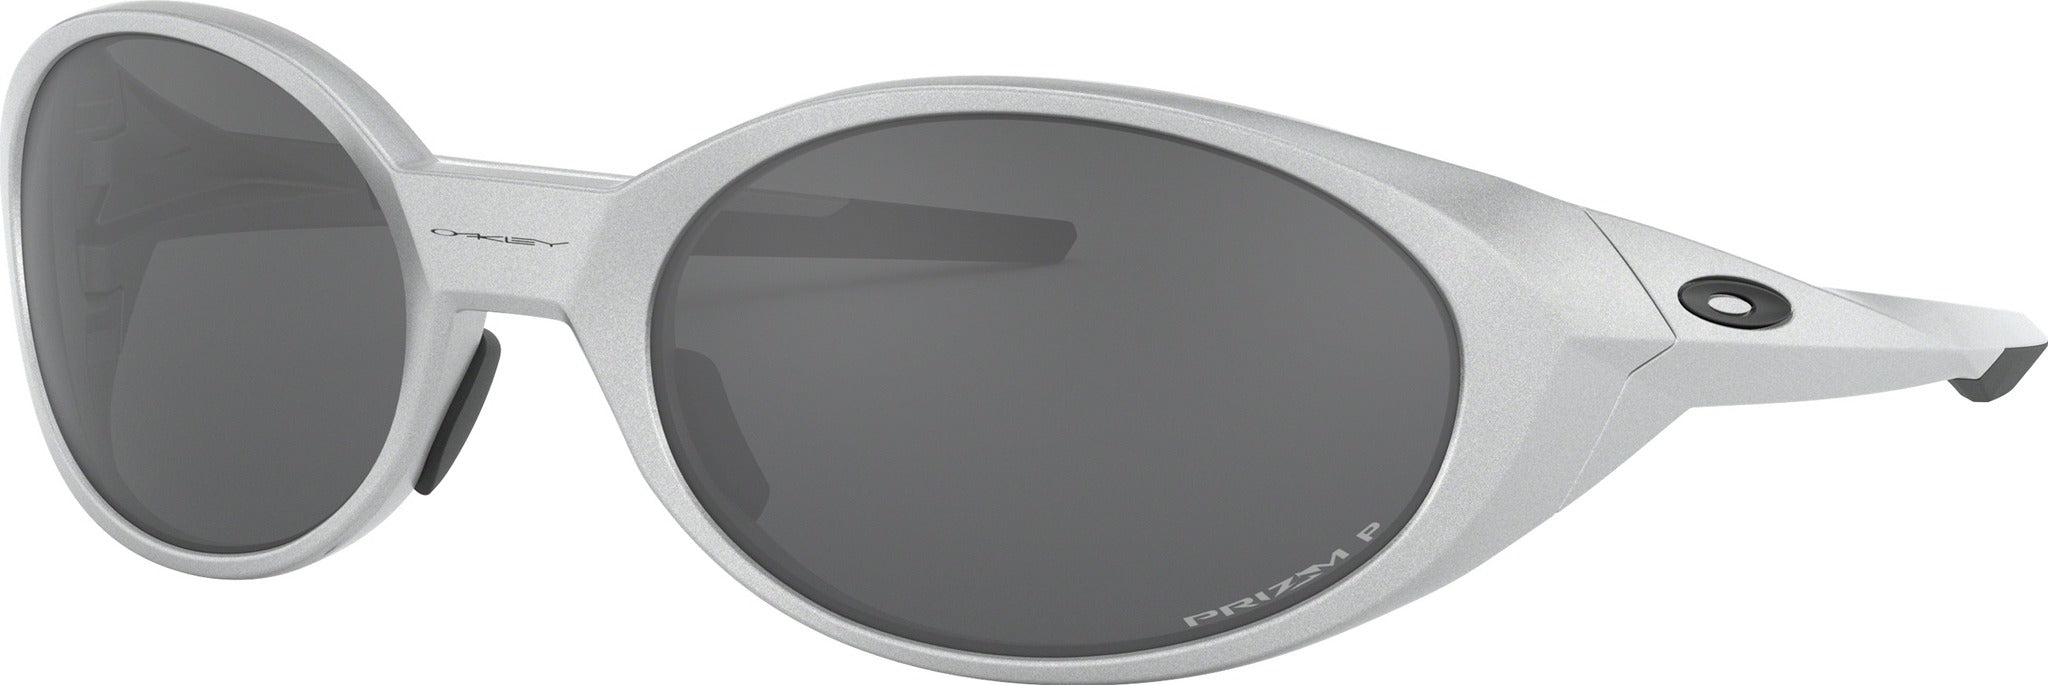 Oakley Eye Jacket Sunglasses - Redux Silver - Prizm Black Iridium Polarized  Lens